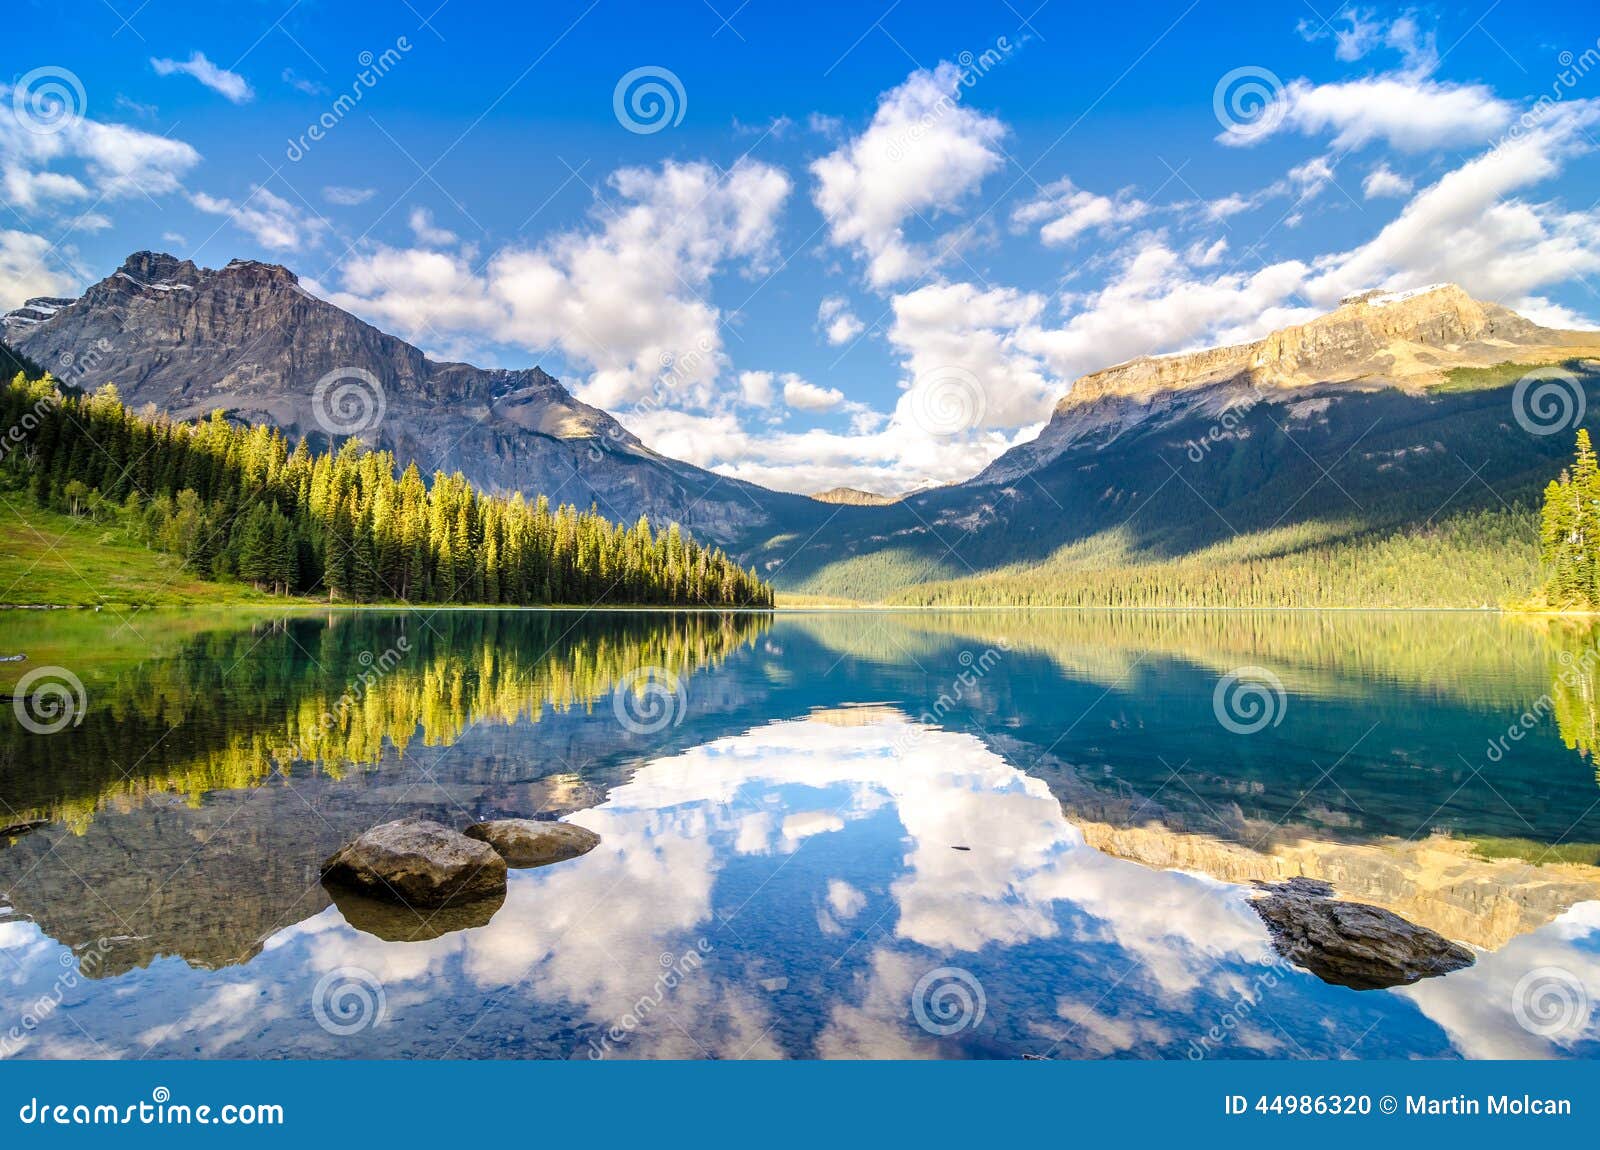 mountain range and water reflection, emerald lake, rocky mountains